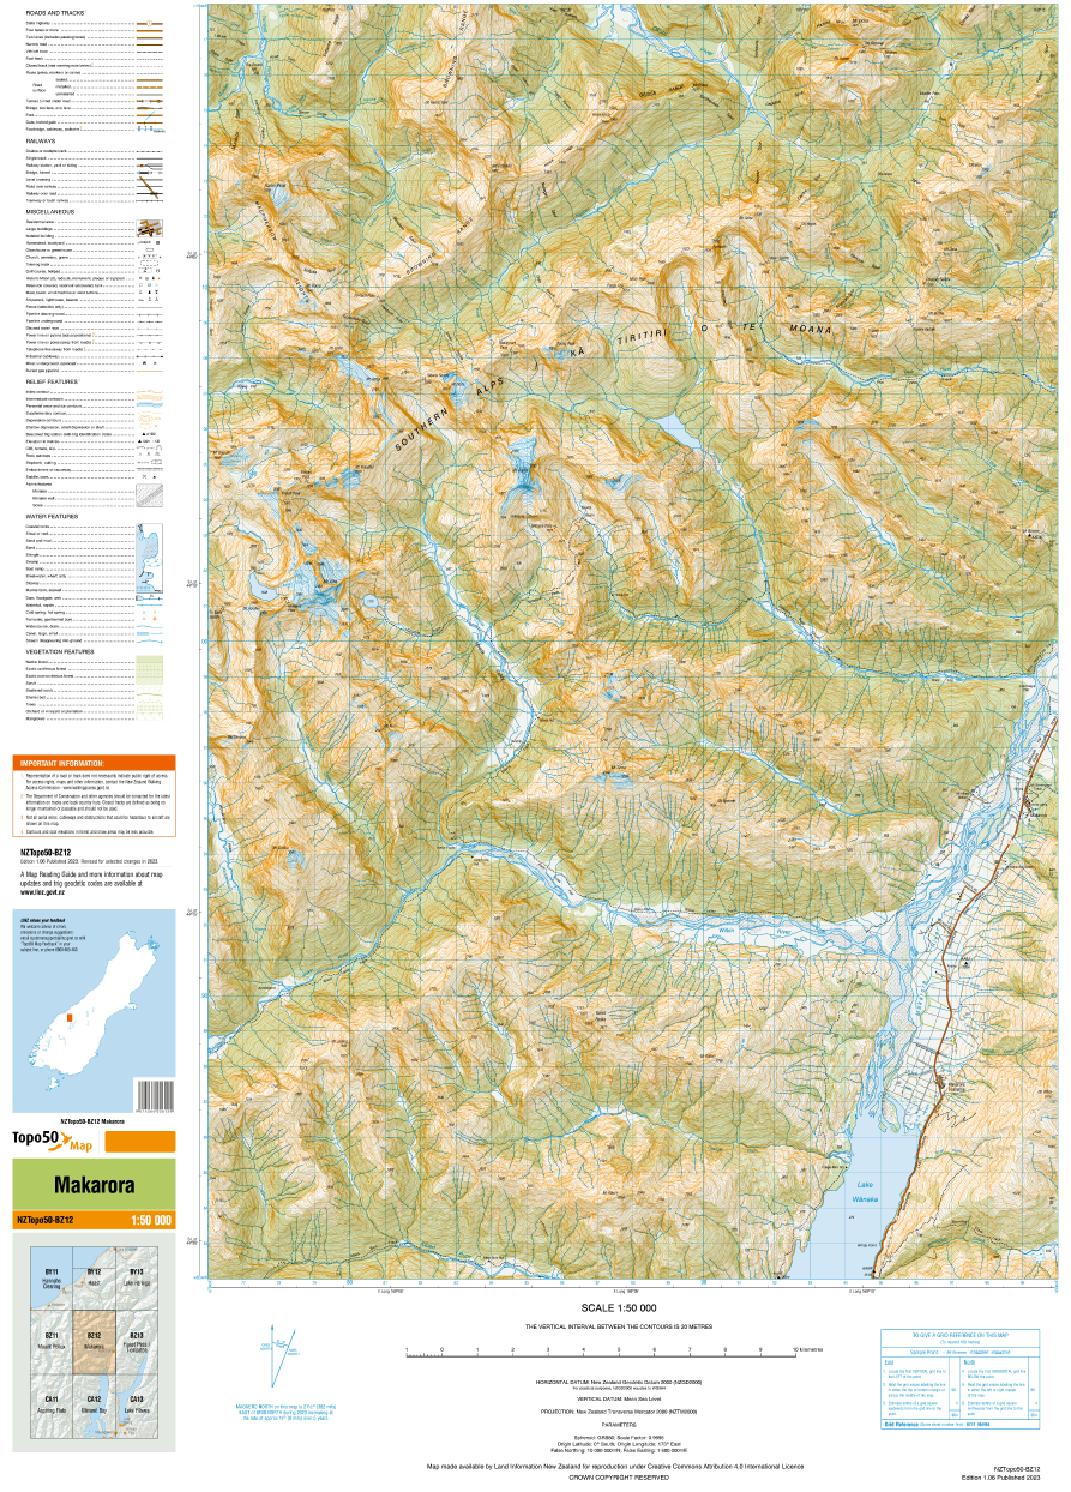 Topo map of Makarora